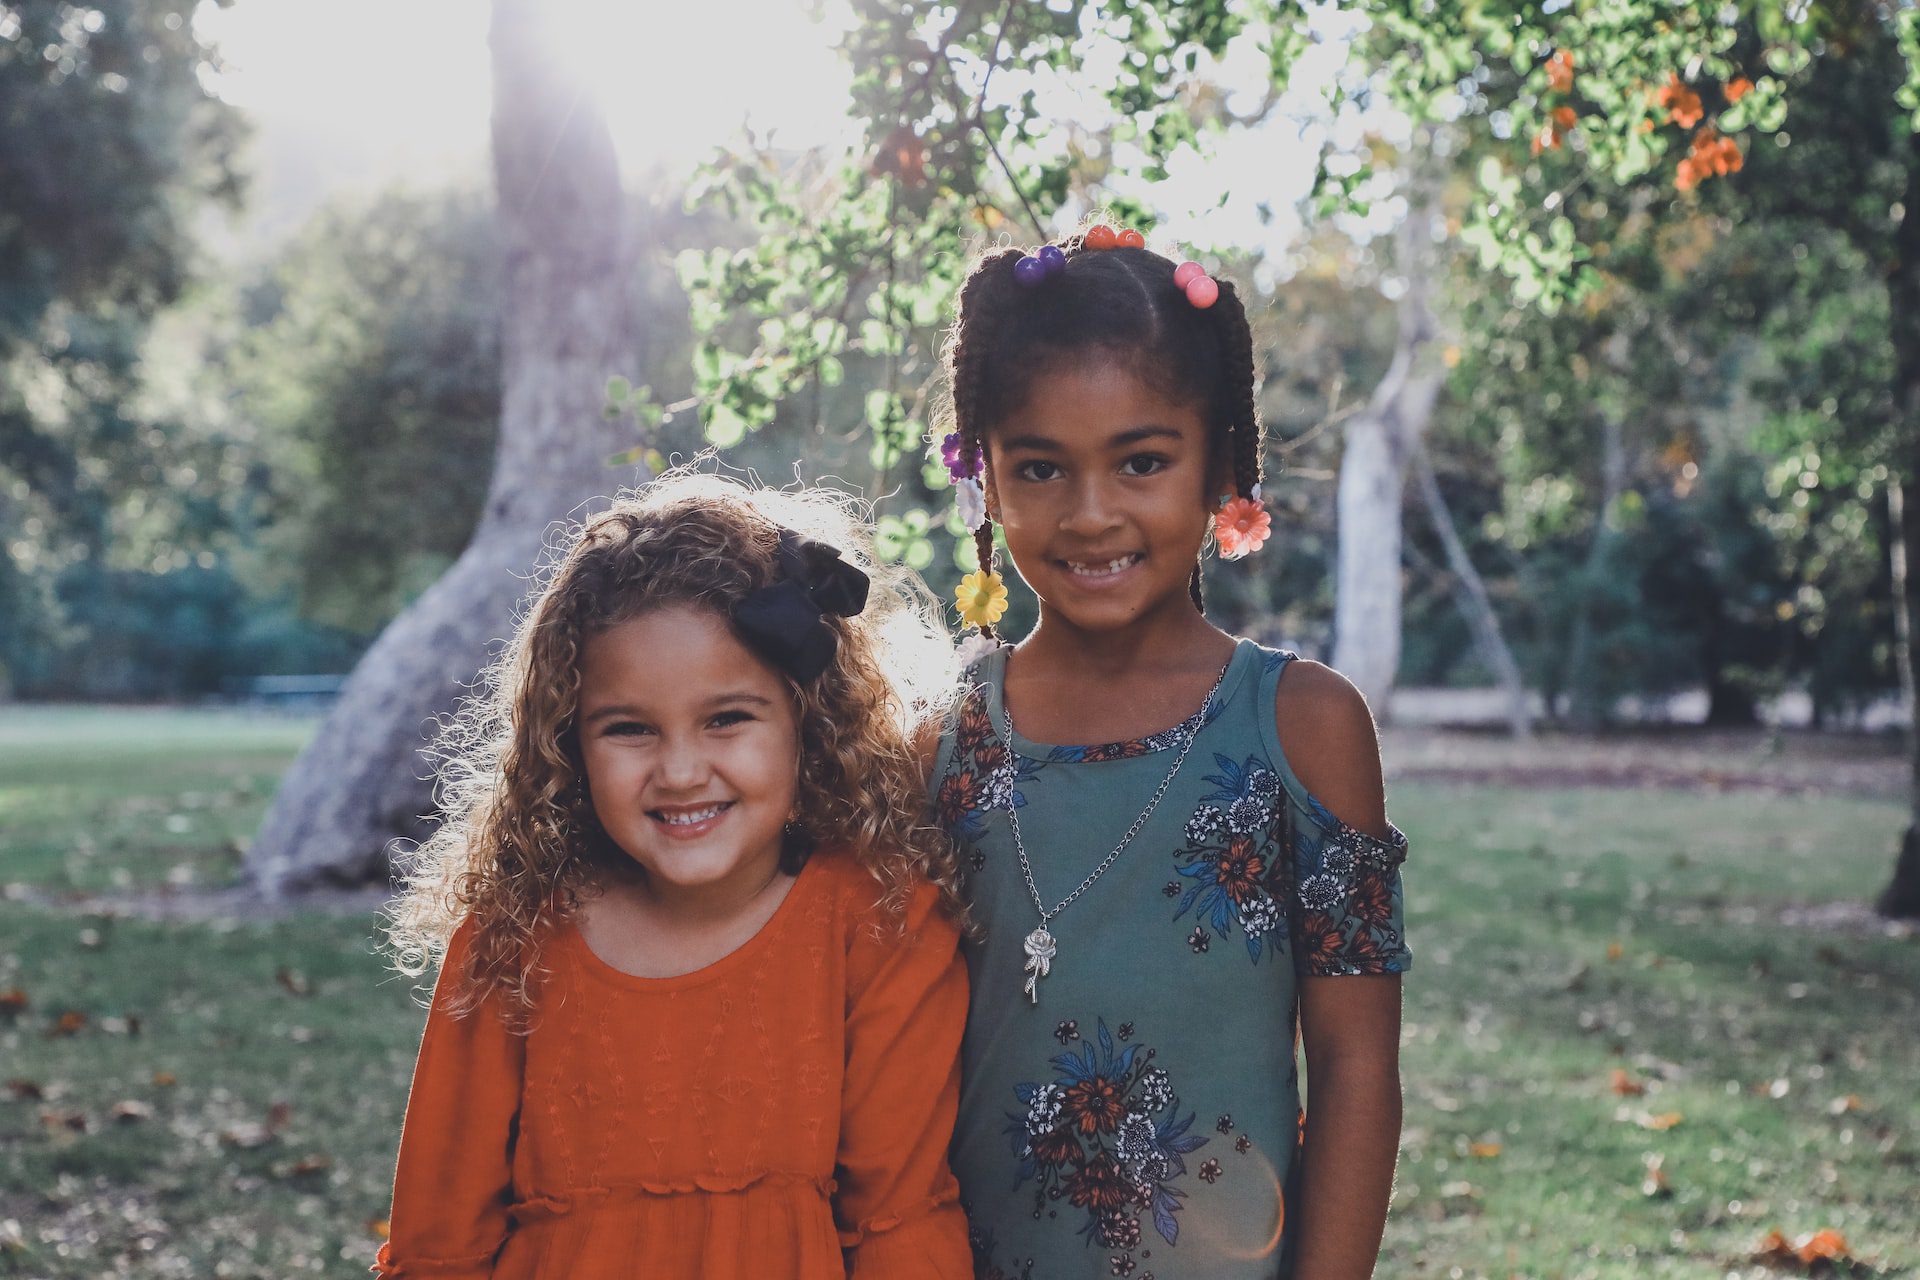 Two little girls smile after brushing up for National Children’s Dental Health Month in Overland Park, KS